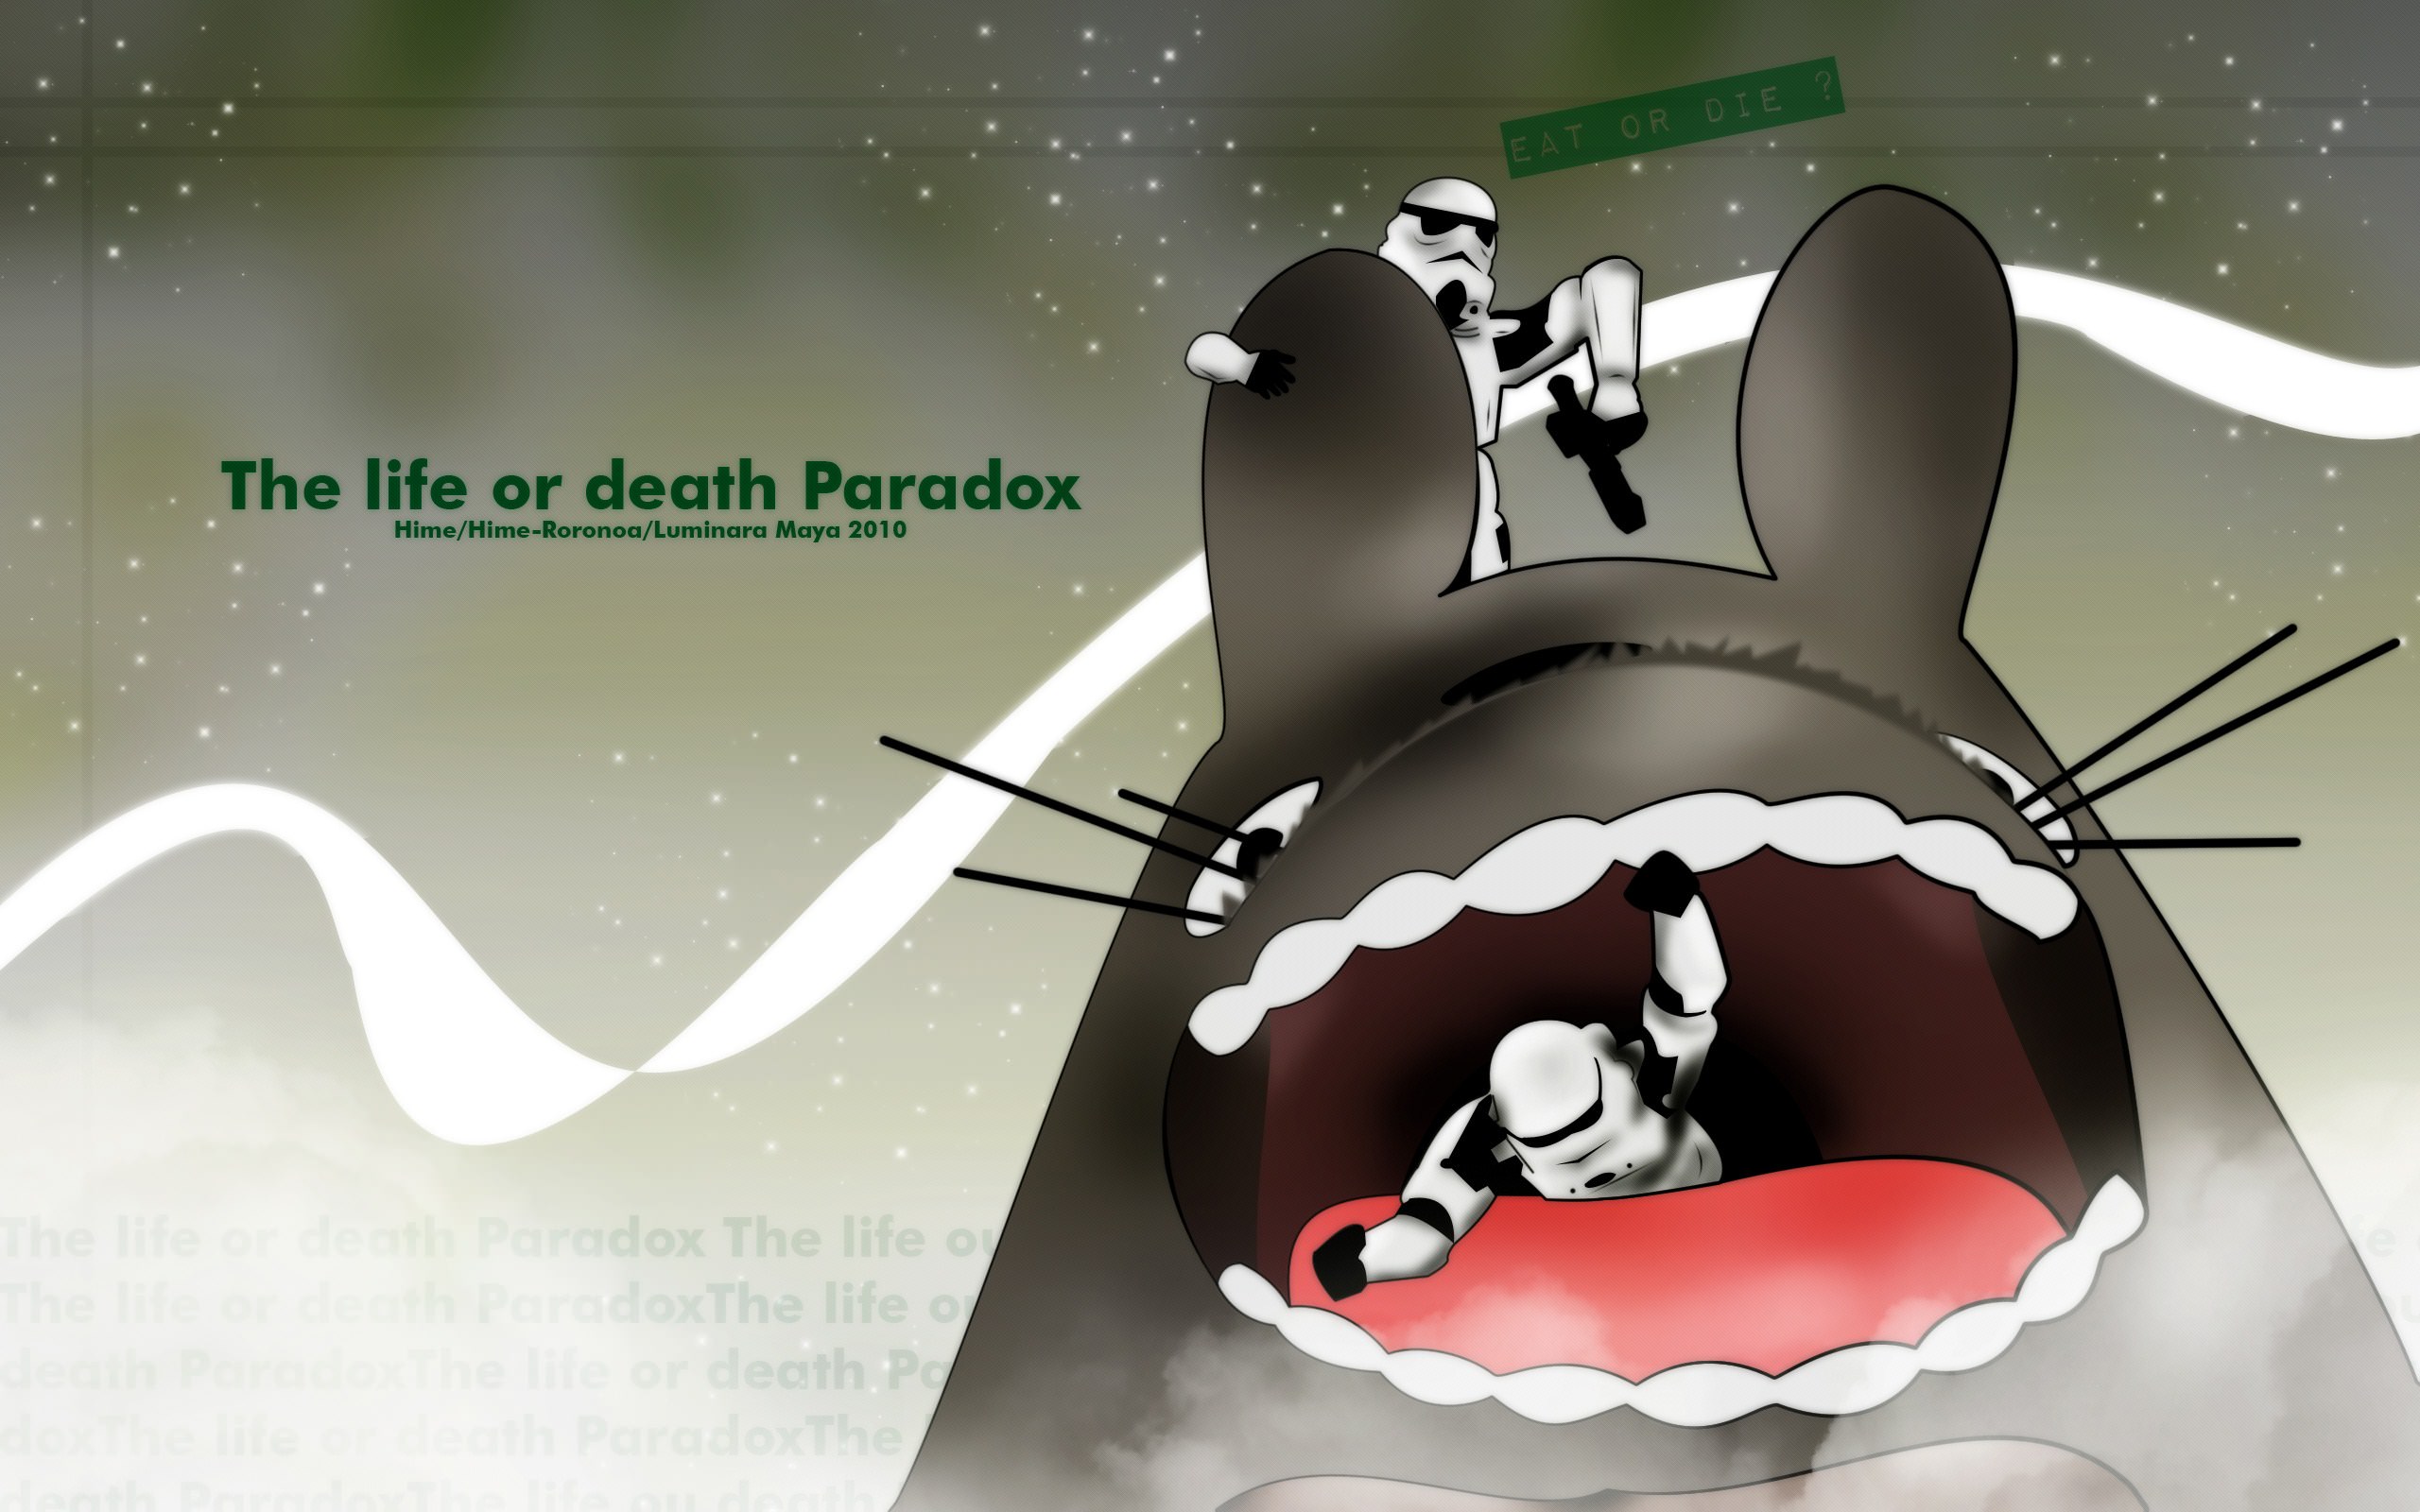 Mon Voisin Totoro the life or death paradox